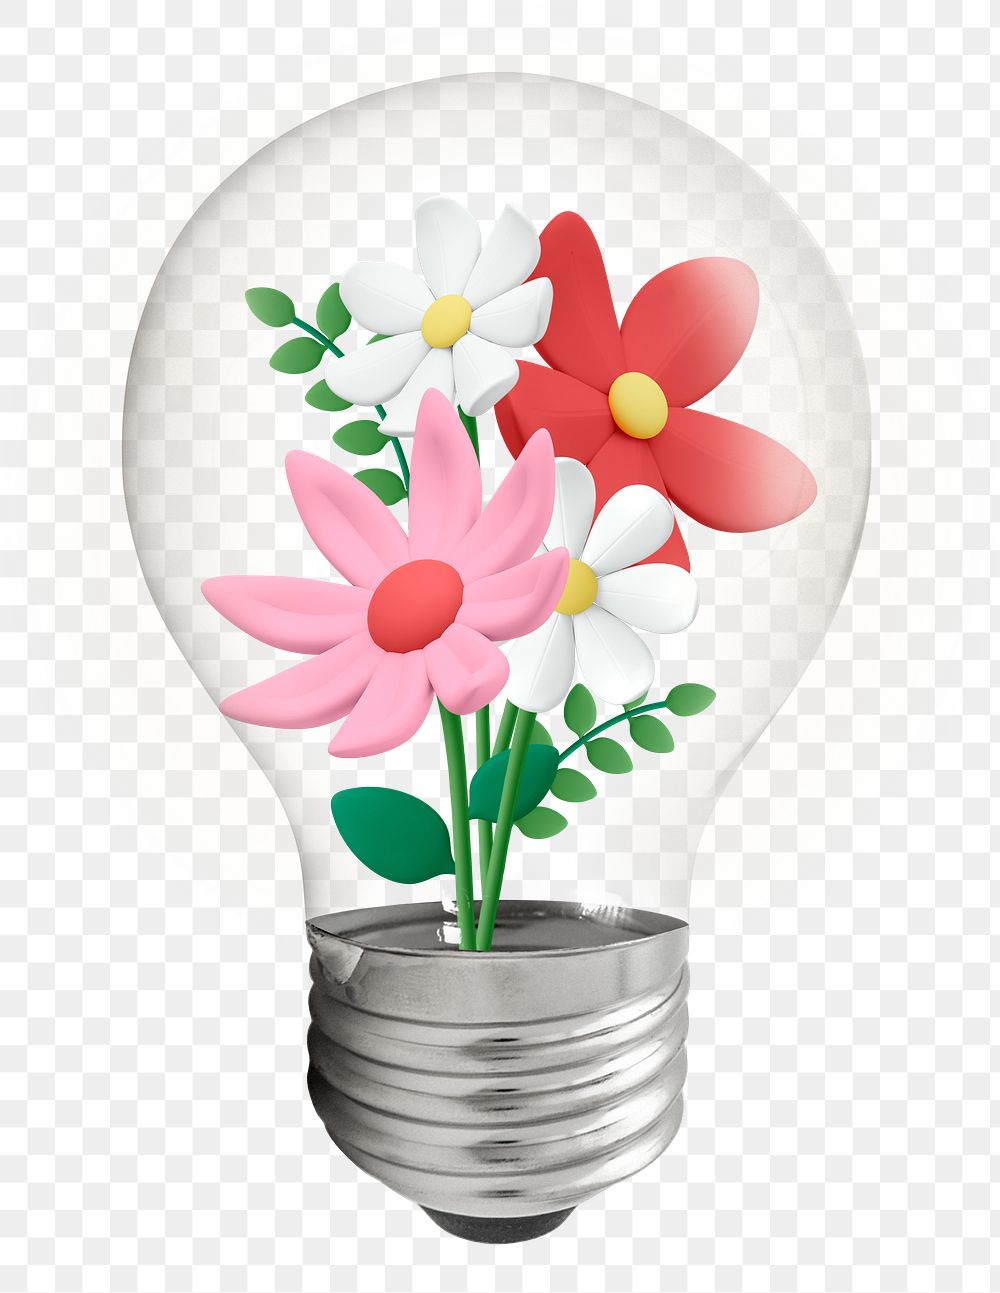 Spring flowers png light bulb, 3D botanical graphic on transparent background